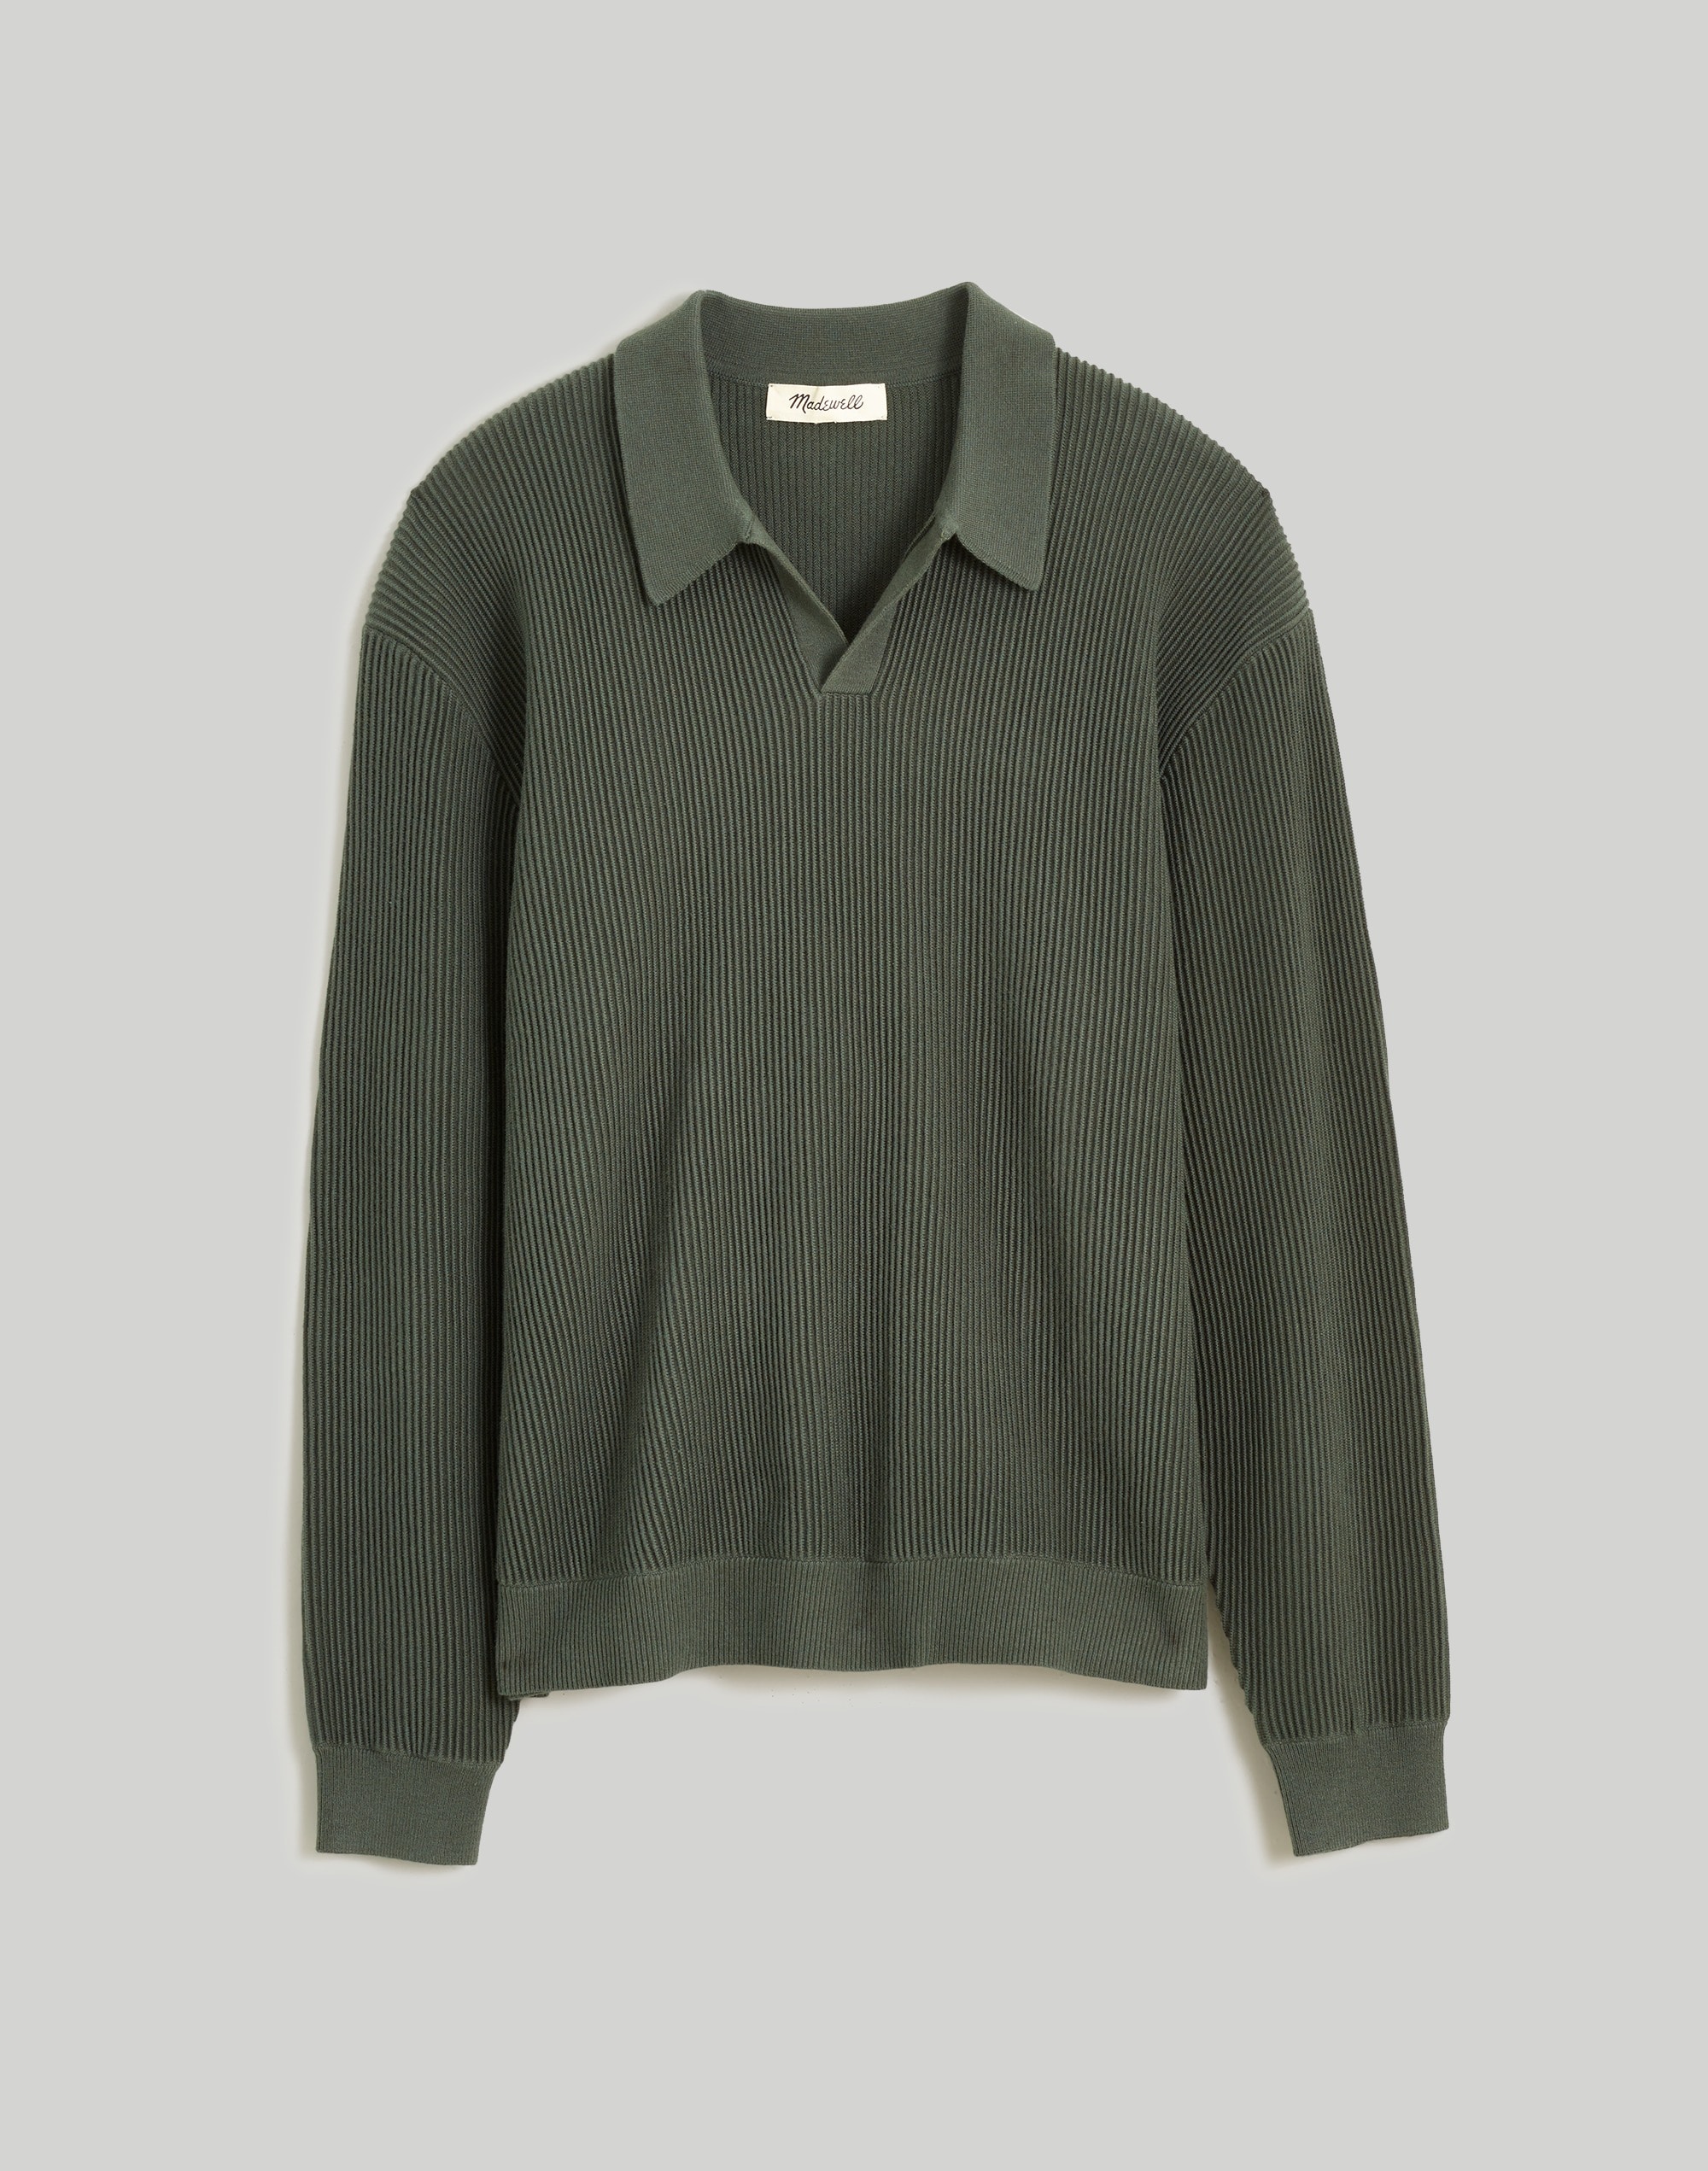 Johnny-Collar Long-Sleeve Sweater Polo